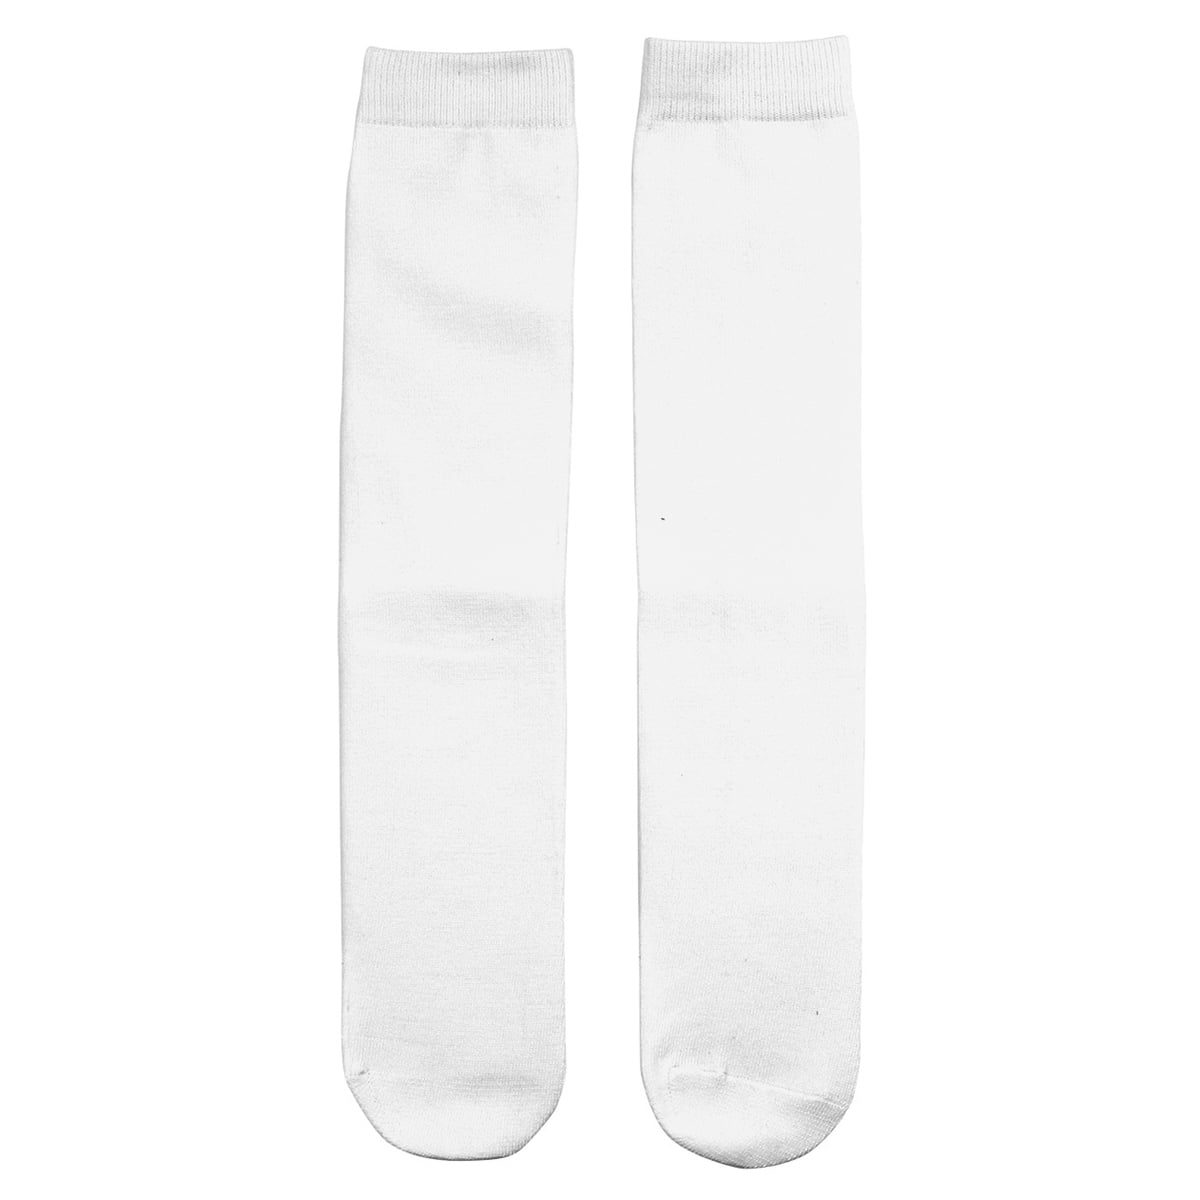 Tube socks blank